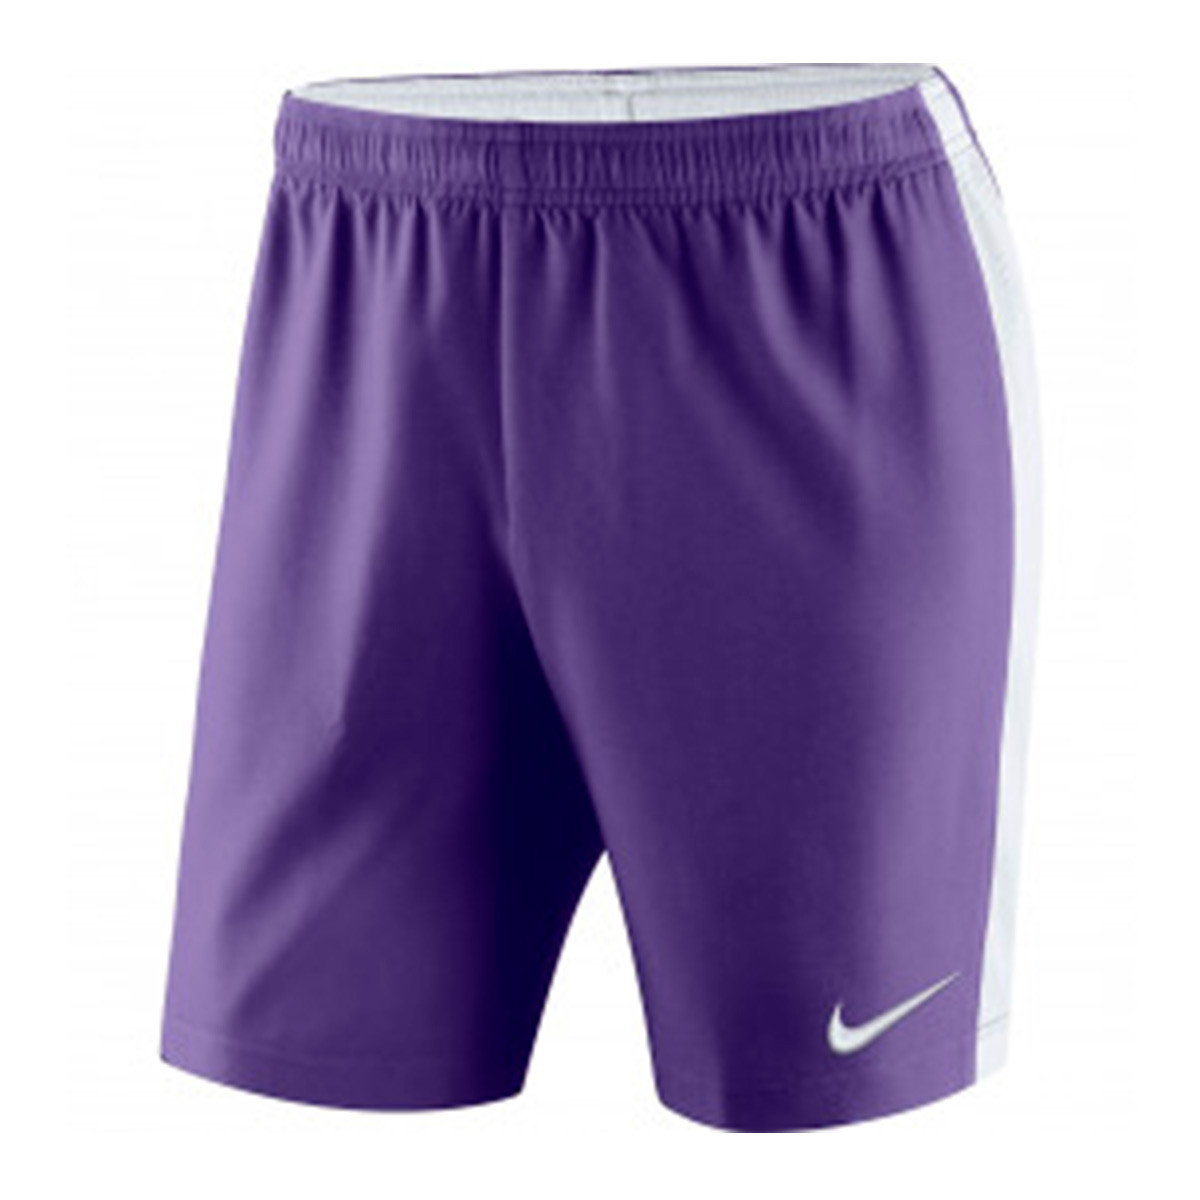 Shorts Nike Venom Woven Court purple 